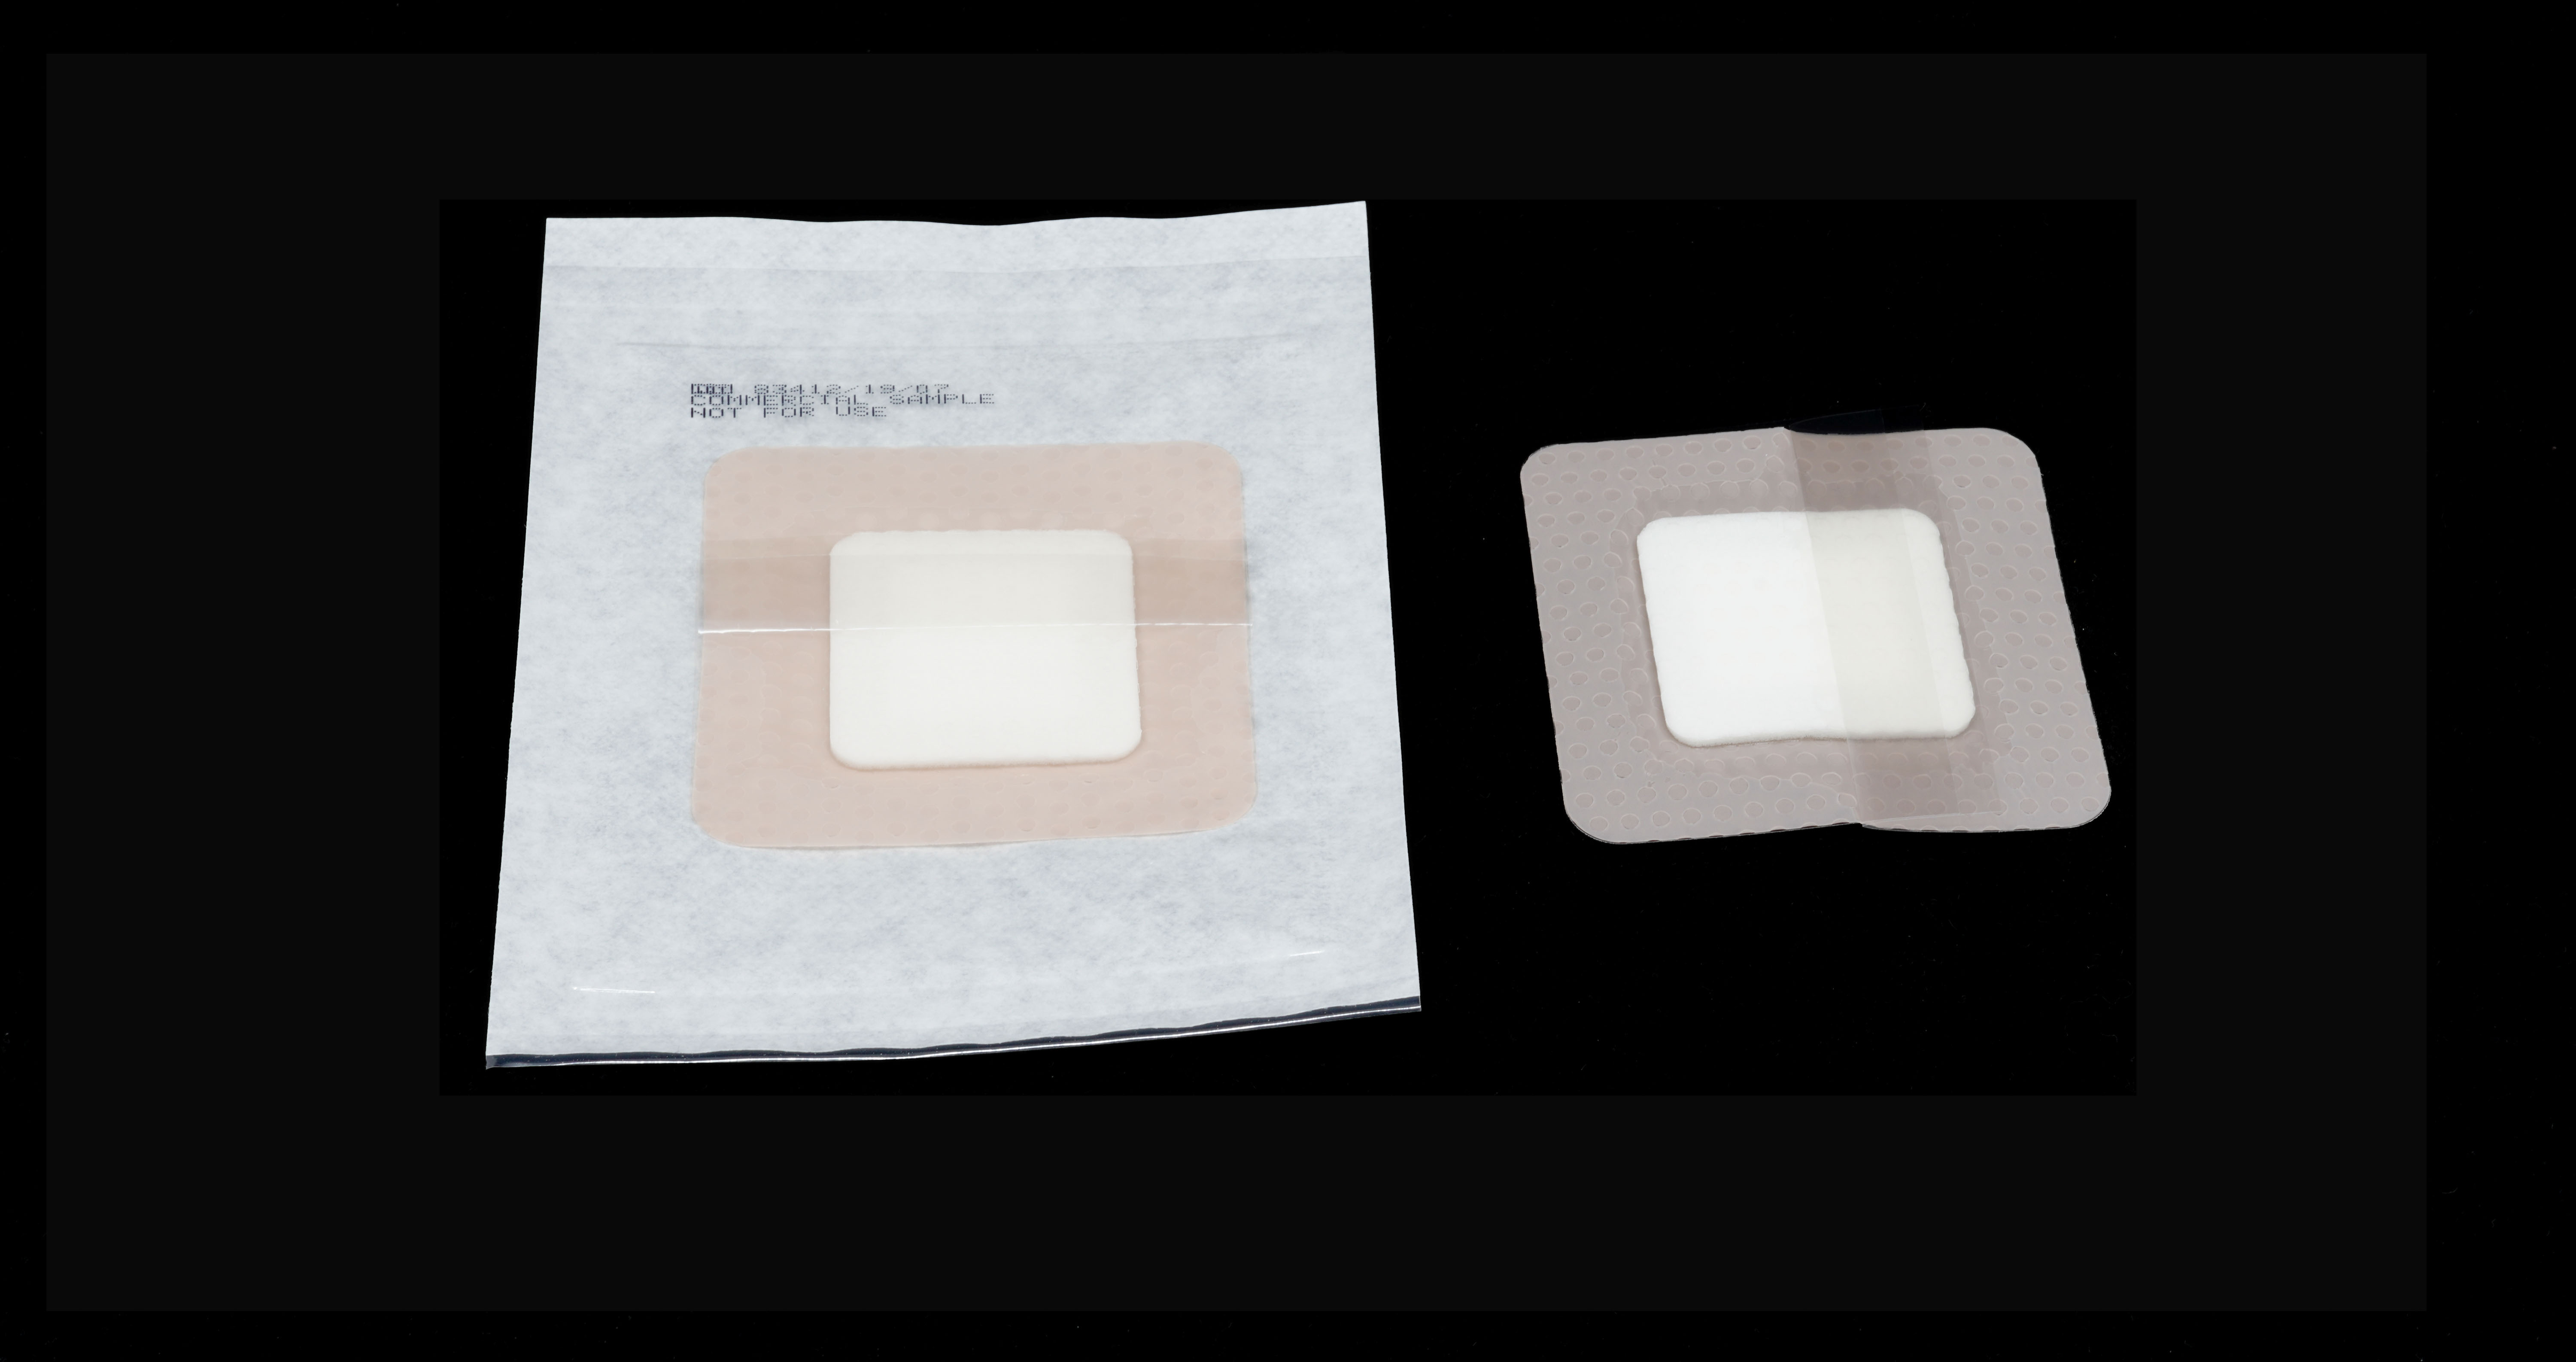 <ul><li>Absorbent dressing for wounds</li><li>Skin-colored polyurethane barrier film&nbsp; </li><li>Customer specified absorbent pad</li><li>Adhesive edge and silicone gel wound interface for atraumatic removal</li></ul>